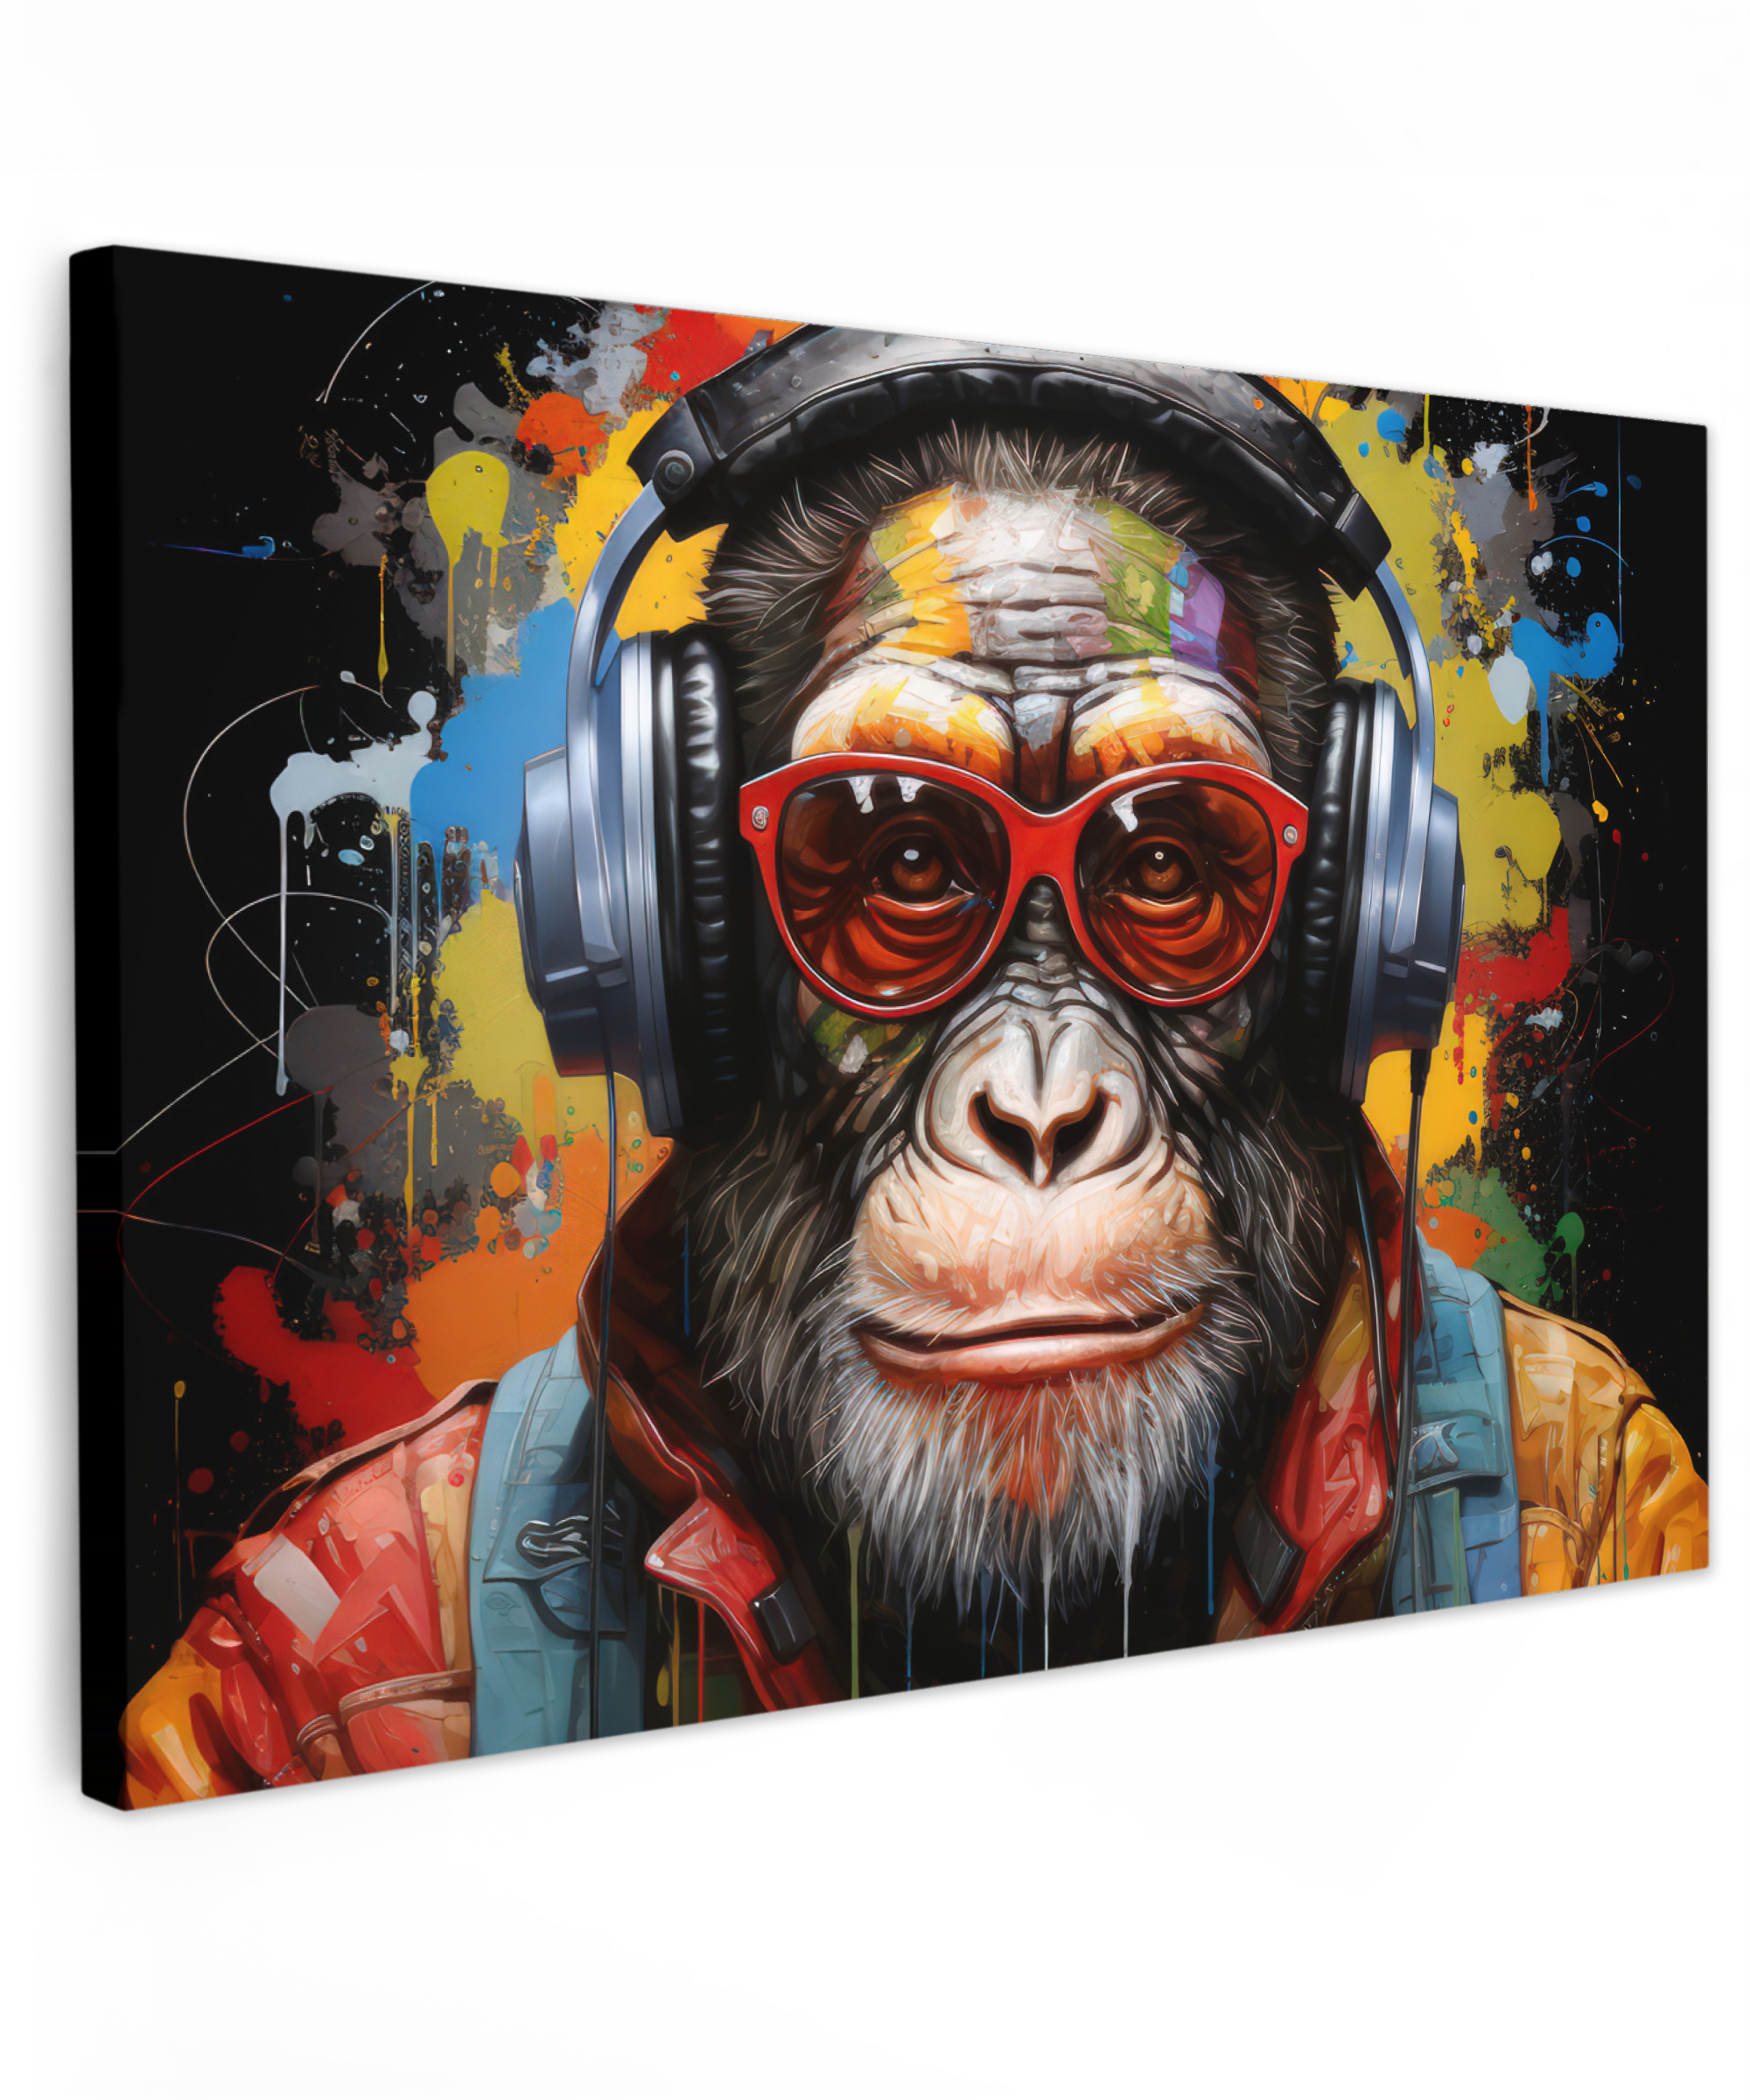 Canvas schilderij - Chimpansee - Aap - dieren - Graffiti - Bril - Koptelefoon - Kleuren